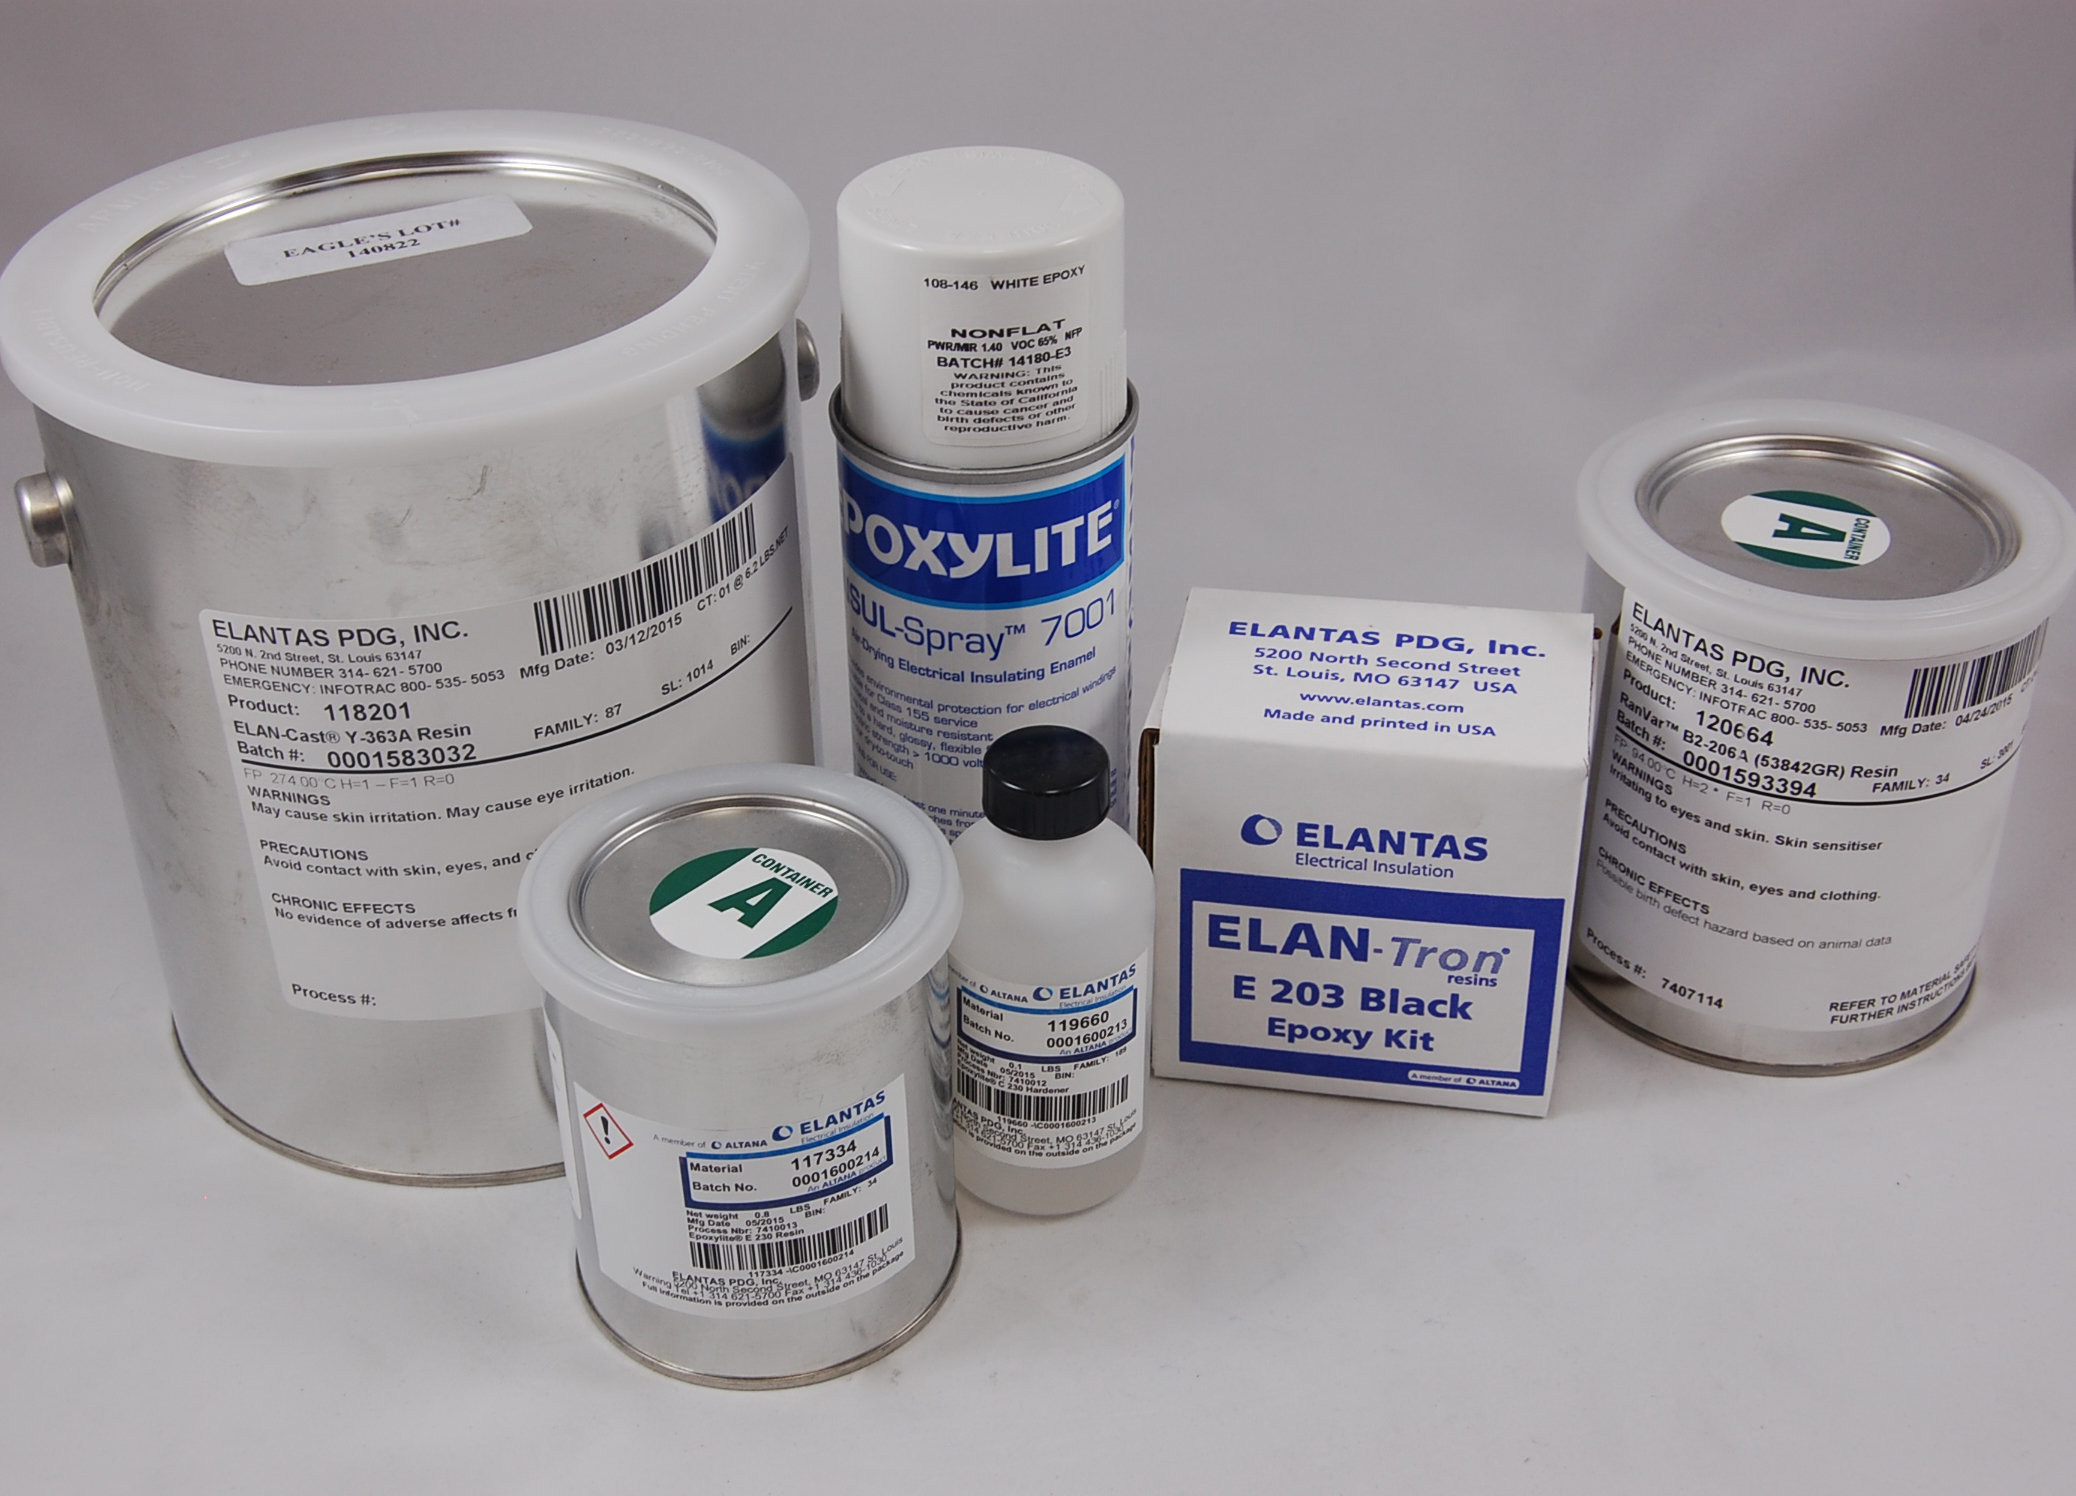 ELAN-Tron C 301 Epoxy Hardener, 1 PINT can (1 lb)